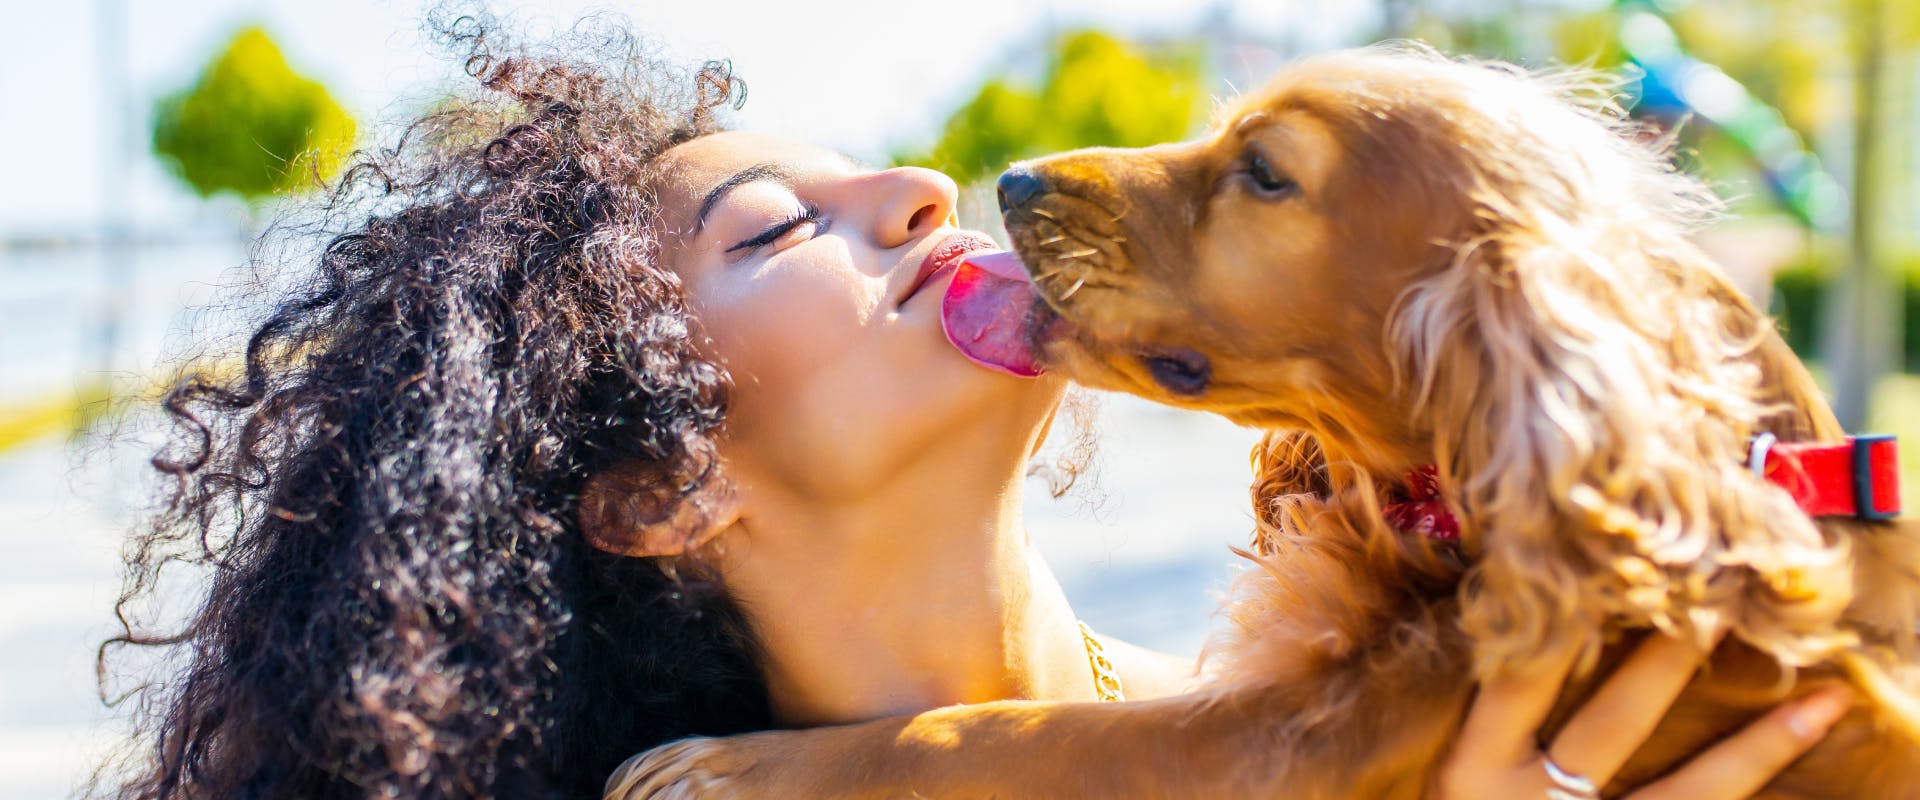 A dog licks a woman.